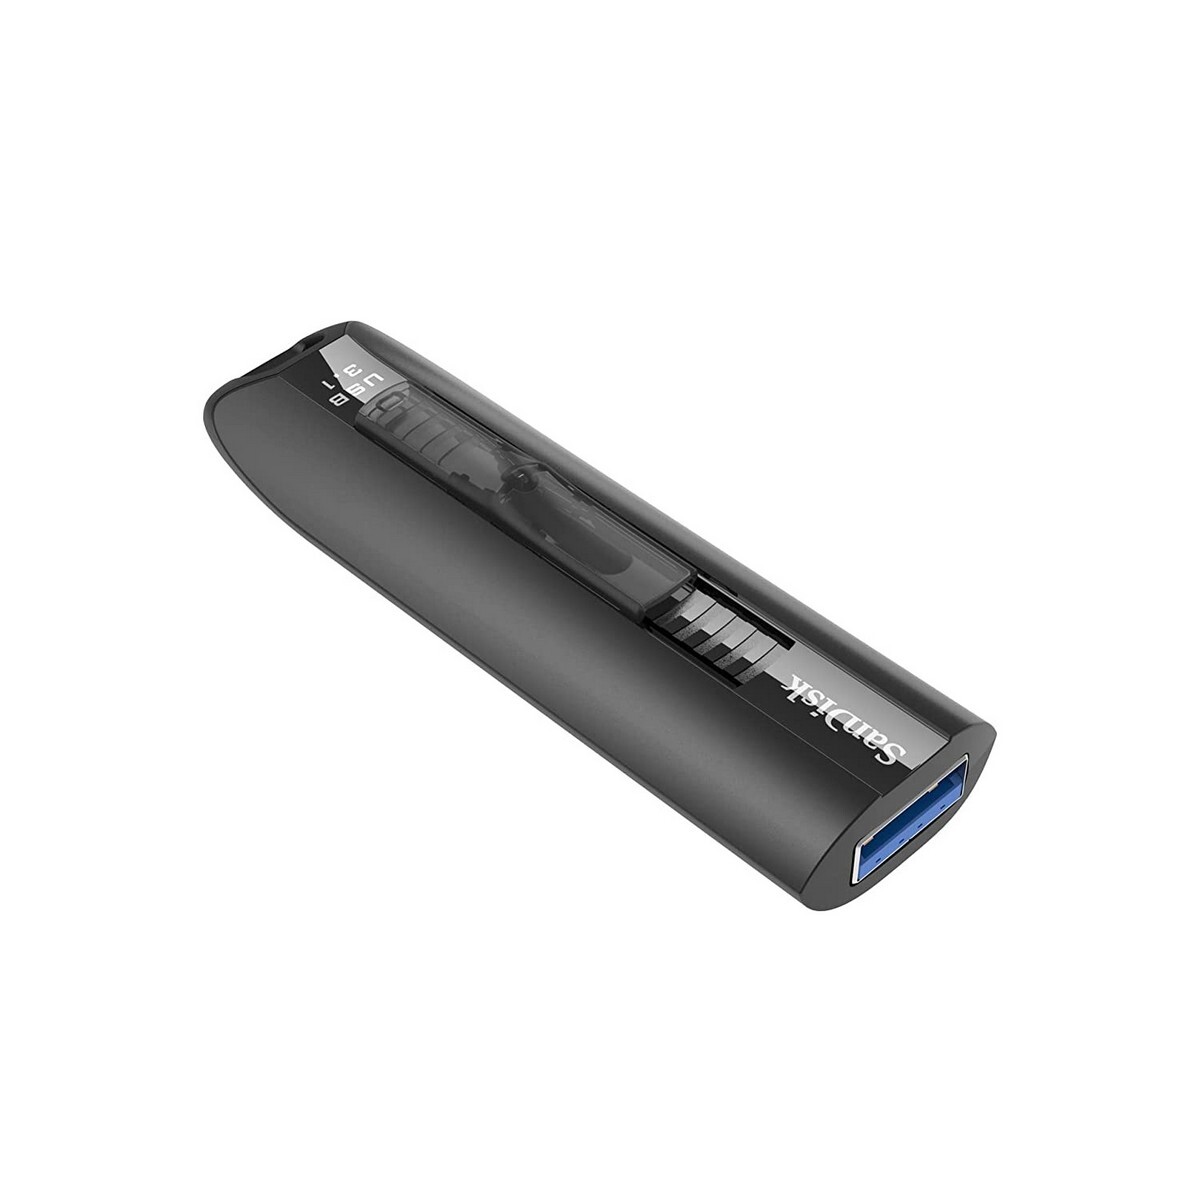 Sandisk Flash Drive Extreme Go USB 3.1 128GB